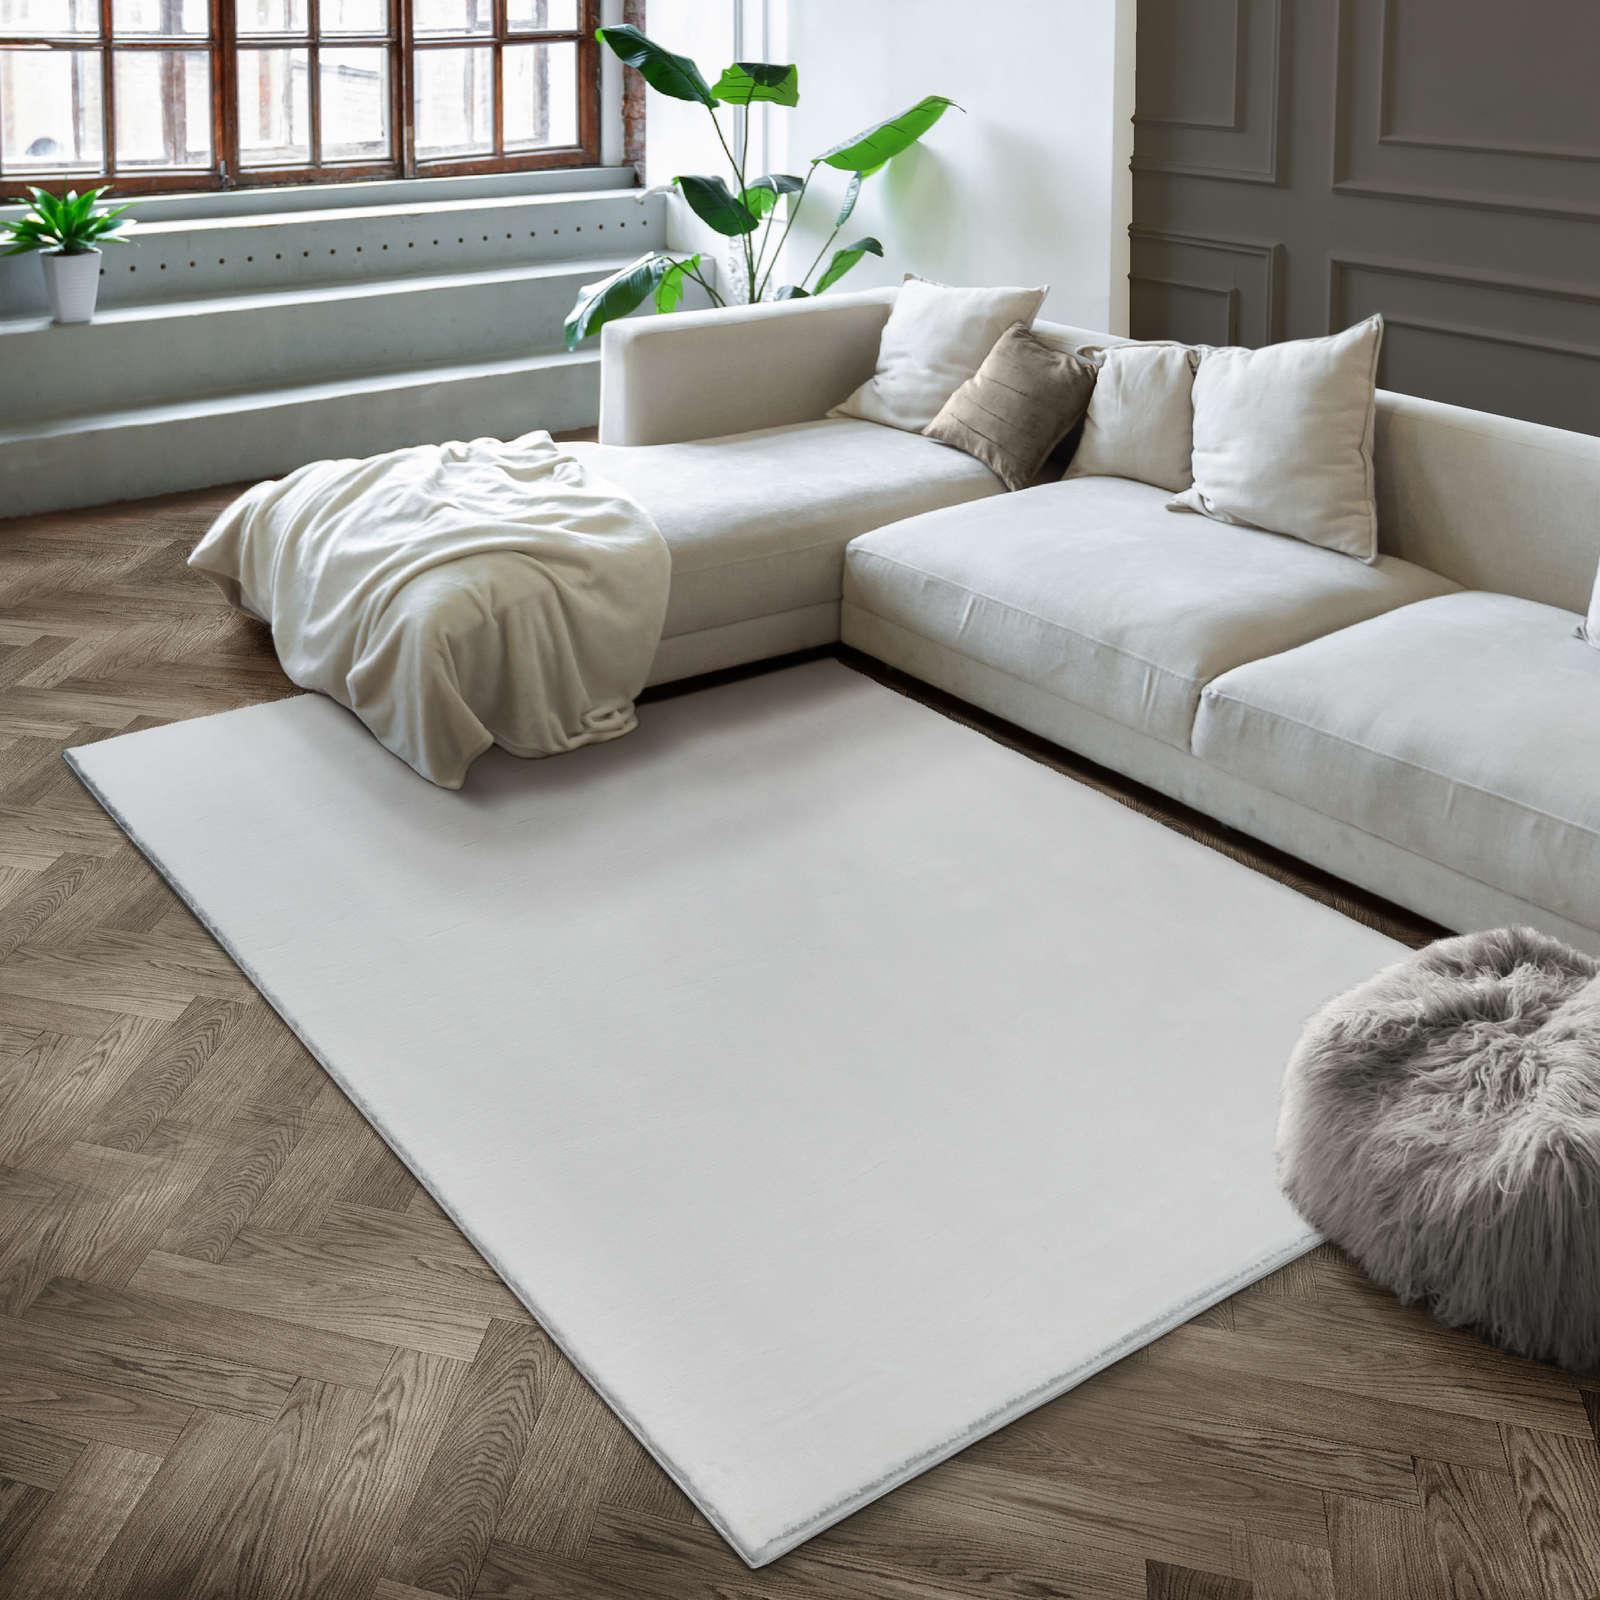             Fluffy high pile carpet in pleasant cream - 230 x 160 cm
        